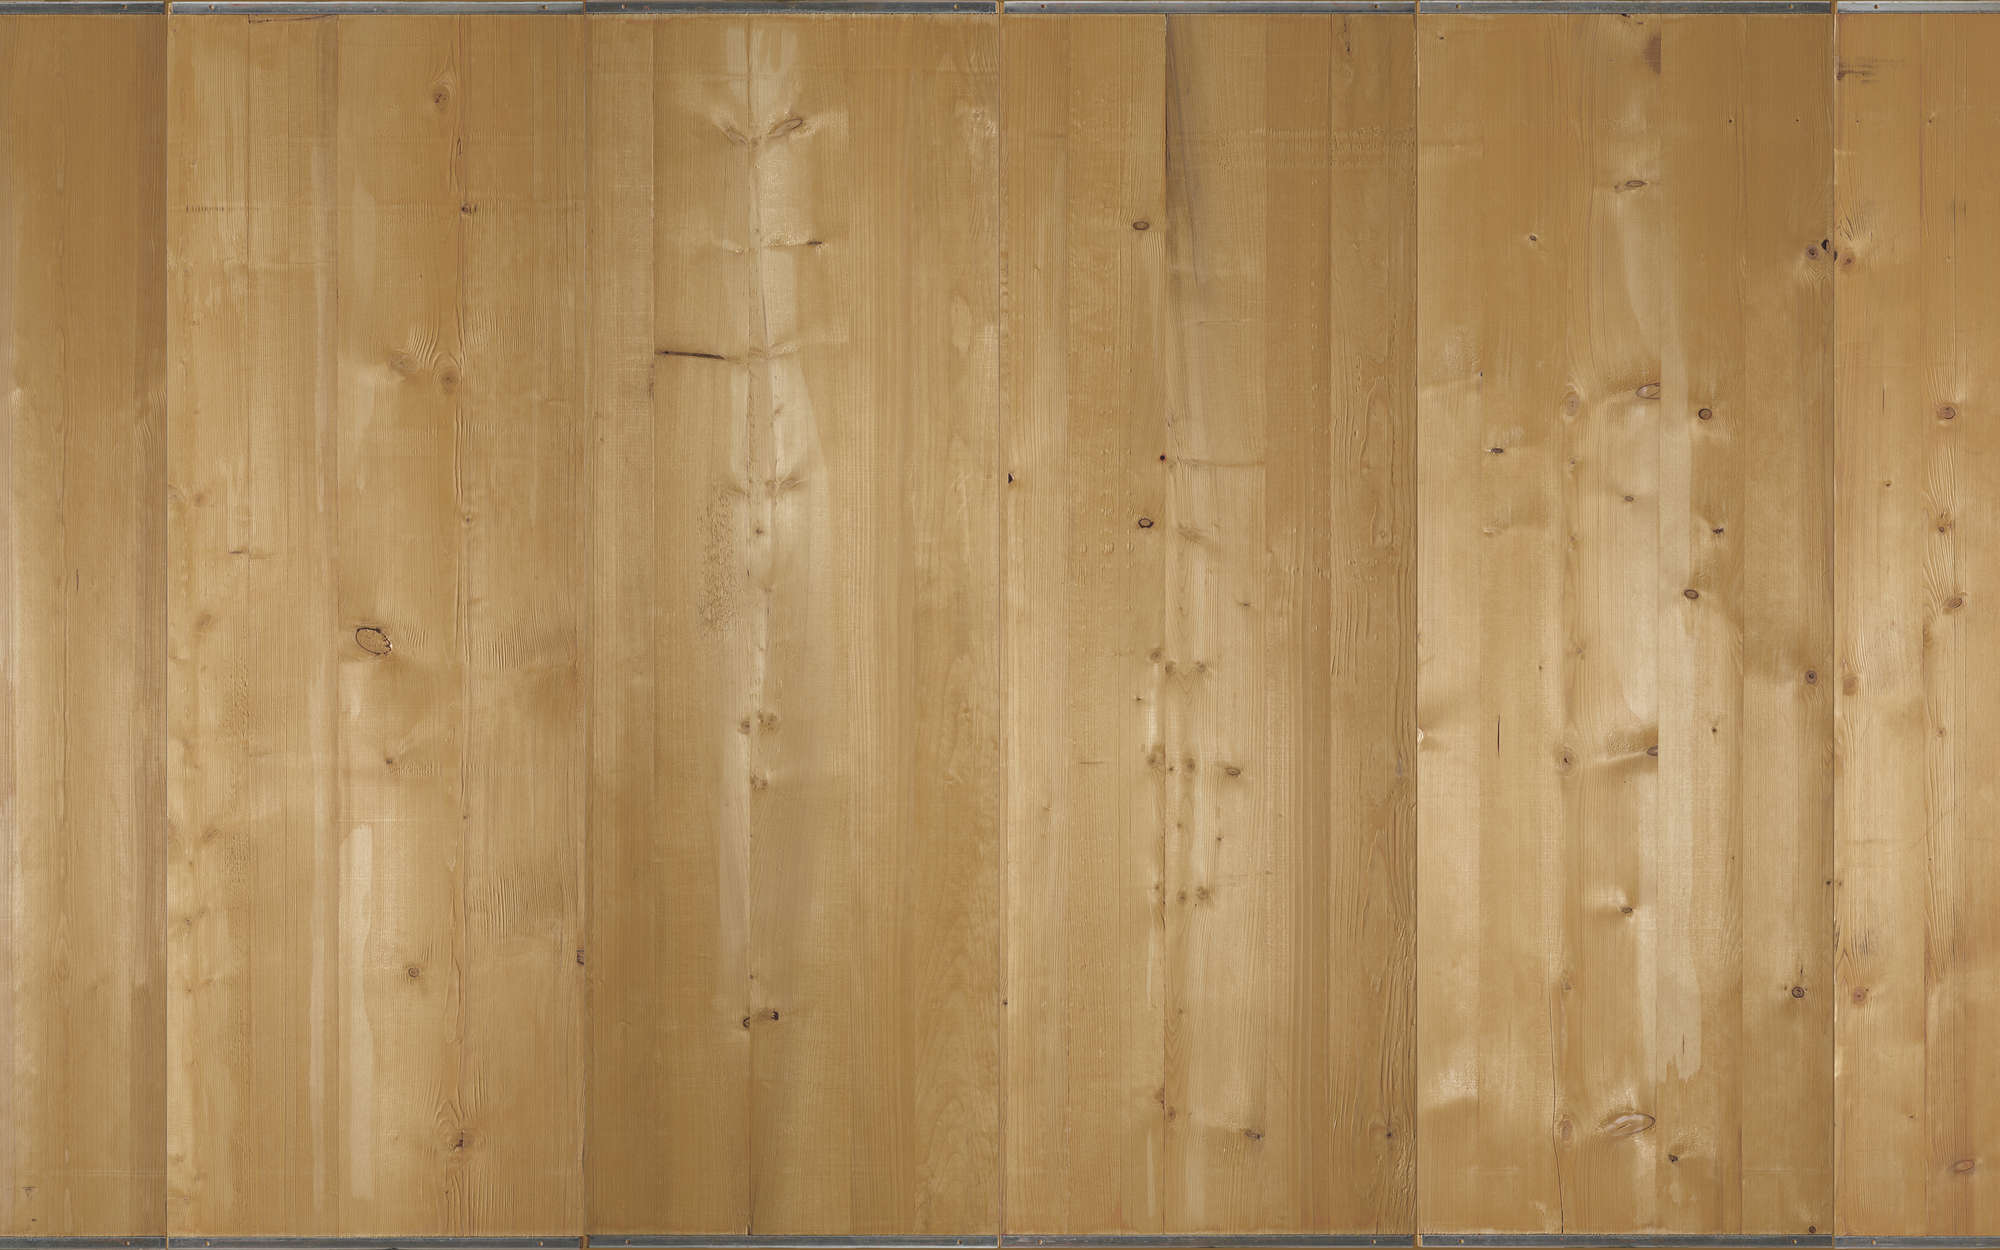             Digital behang licht houten planken - parelmoer glad vlies
        